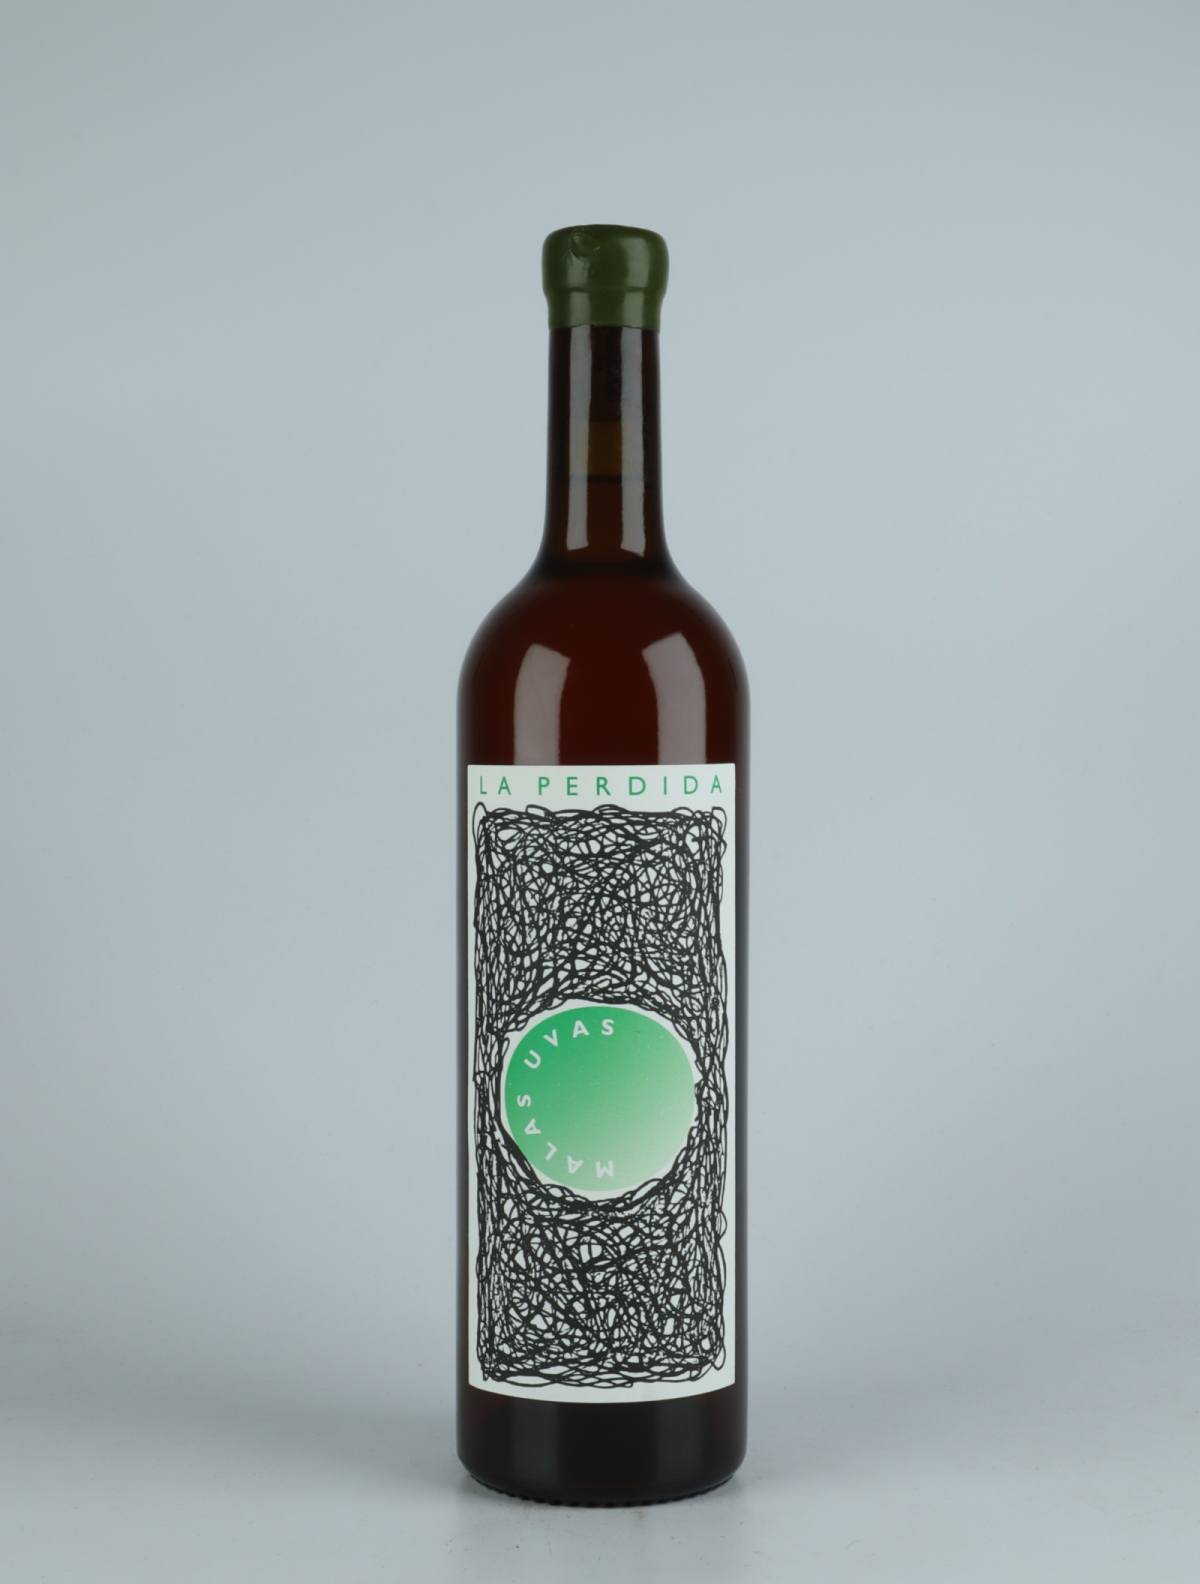 En flaske 2021 Malas Uvas Hvidvin fra La Perdida, Ribeira Sacra i Spanien